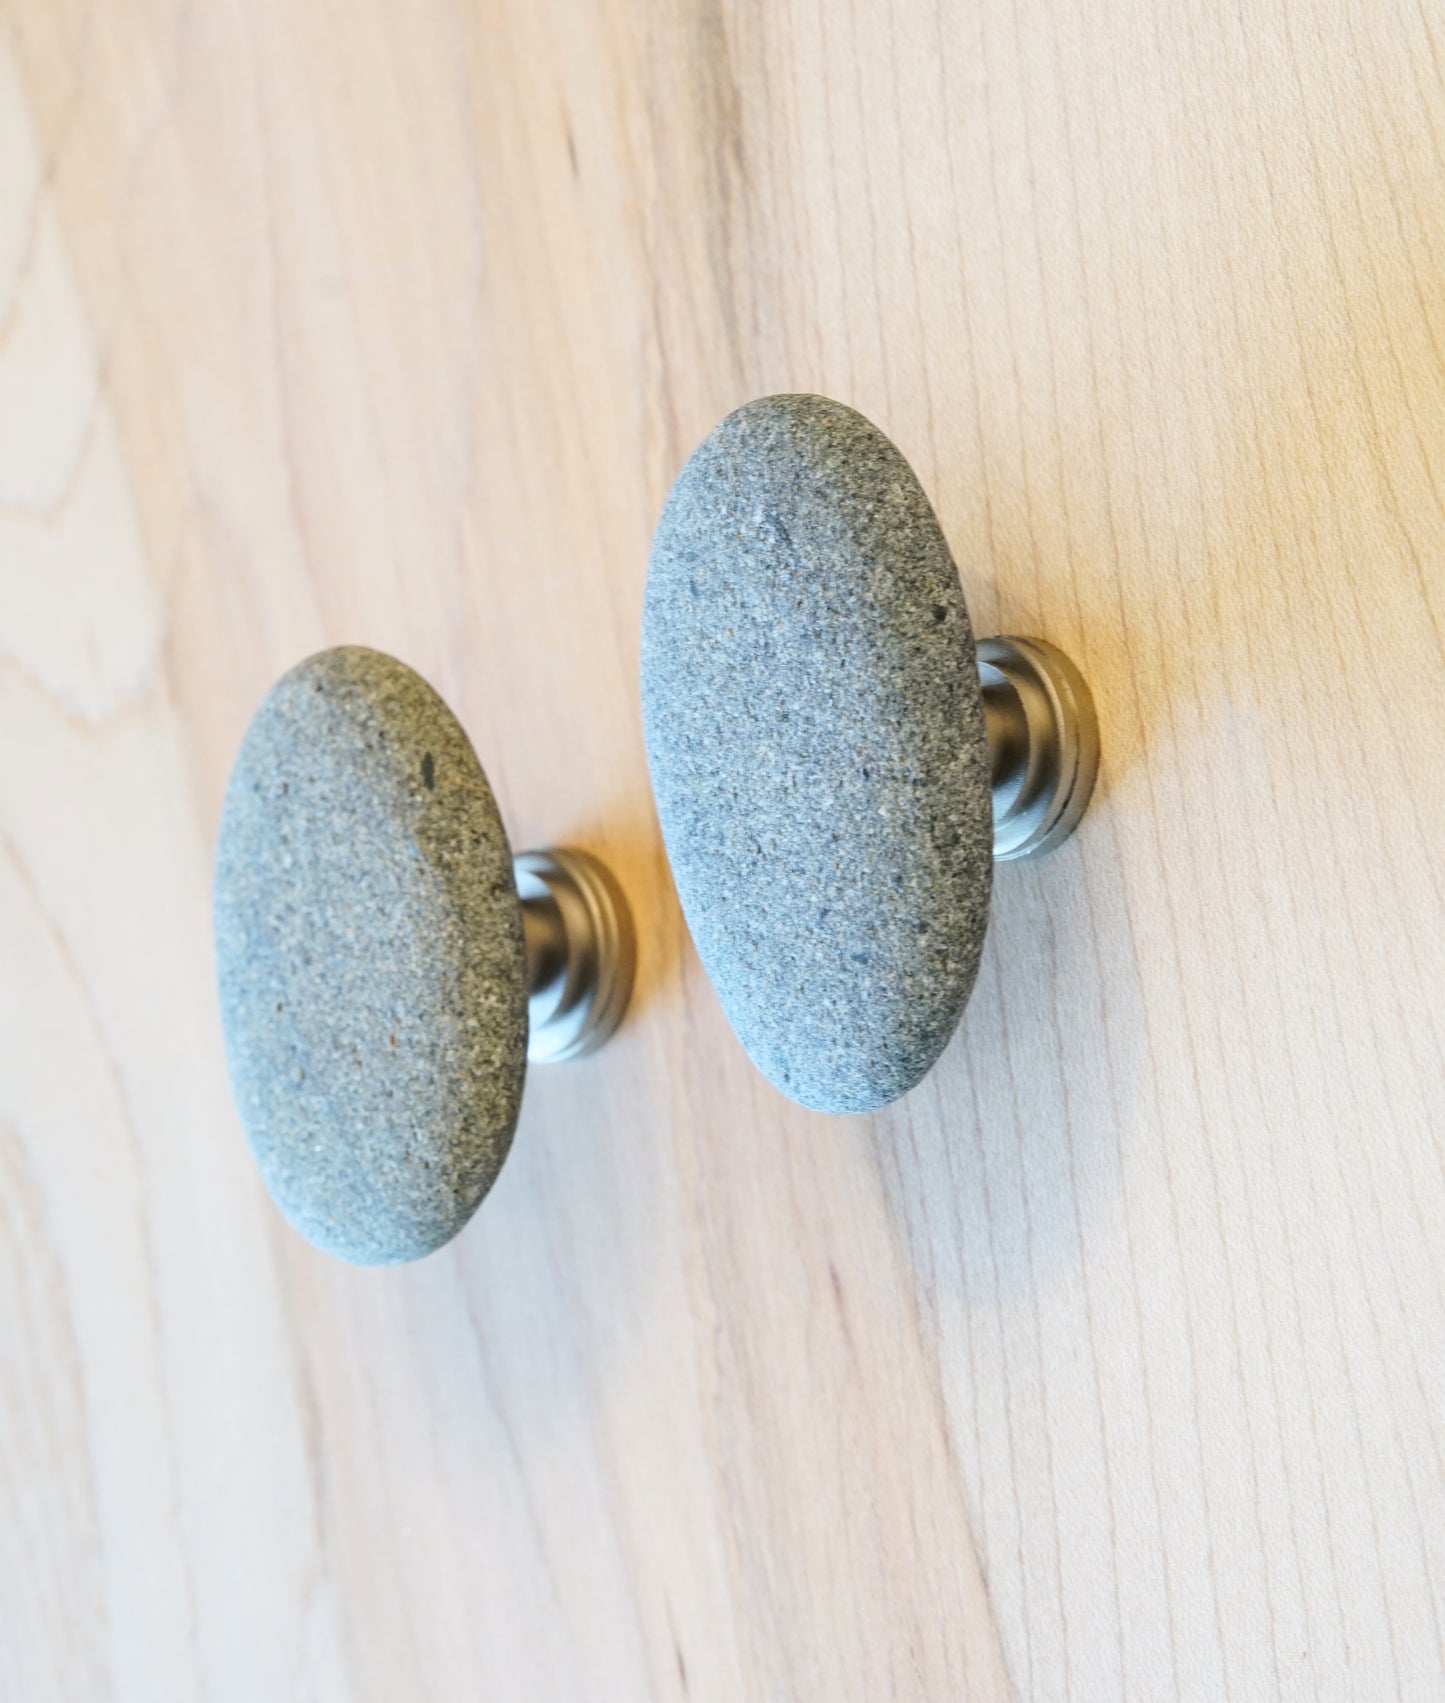 Beach Rock Stone Pebble Cabinet Knobs Cabinet Hardware - Set of 10